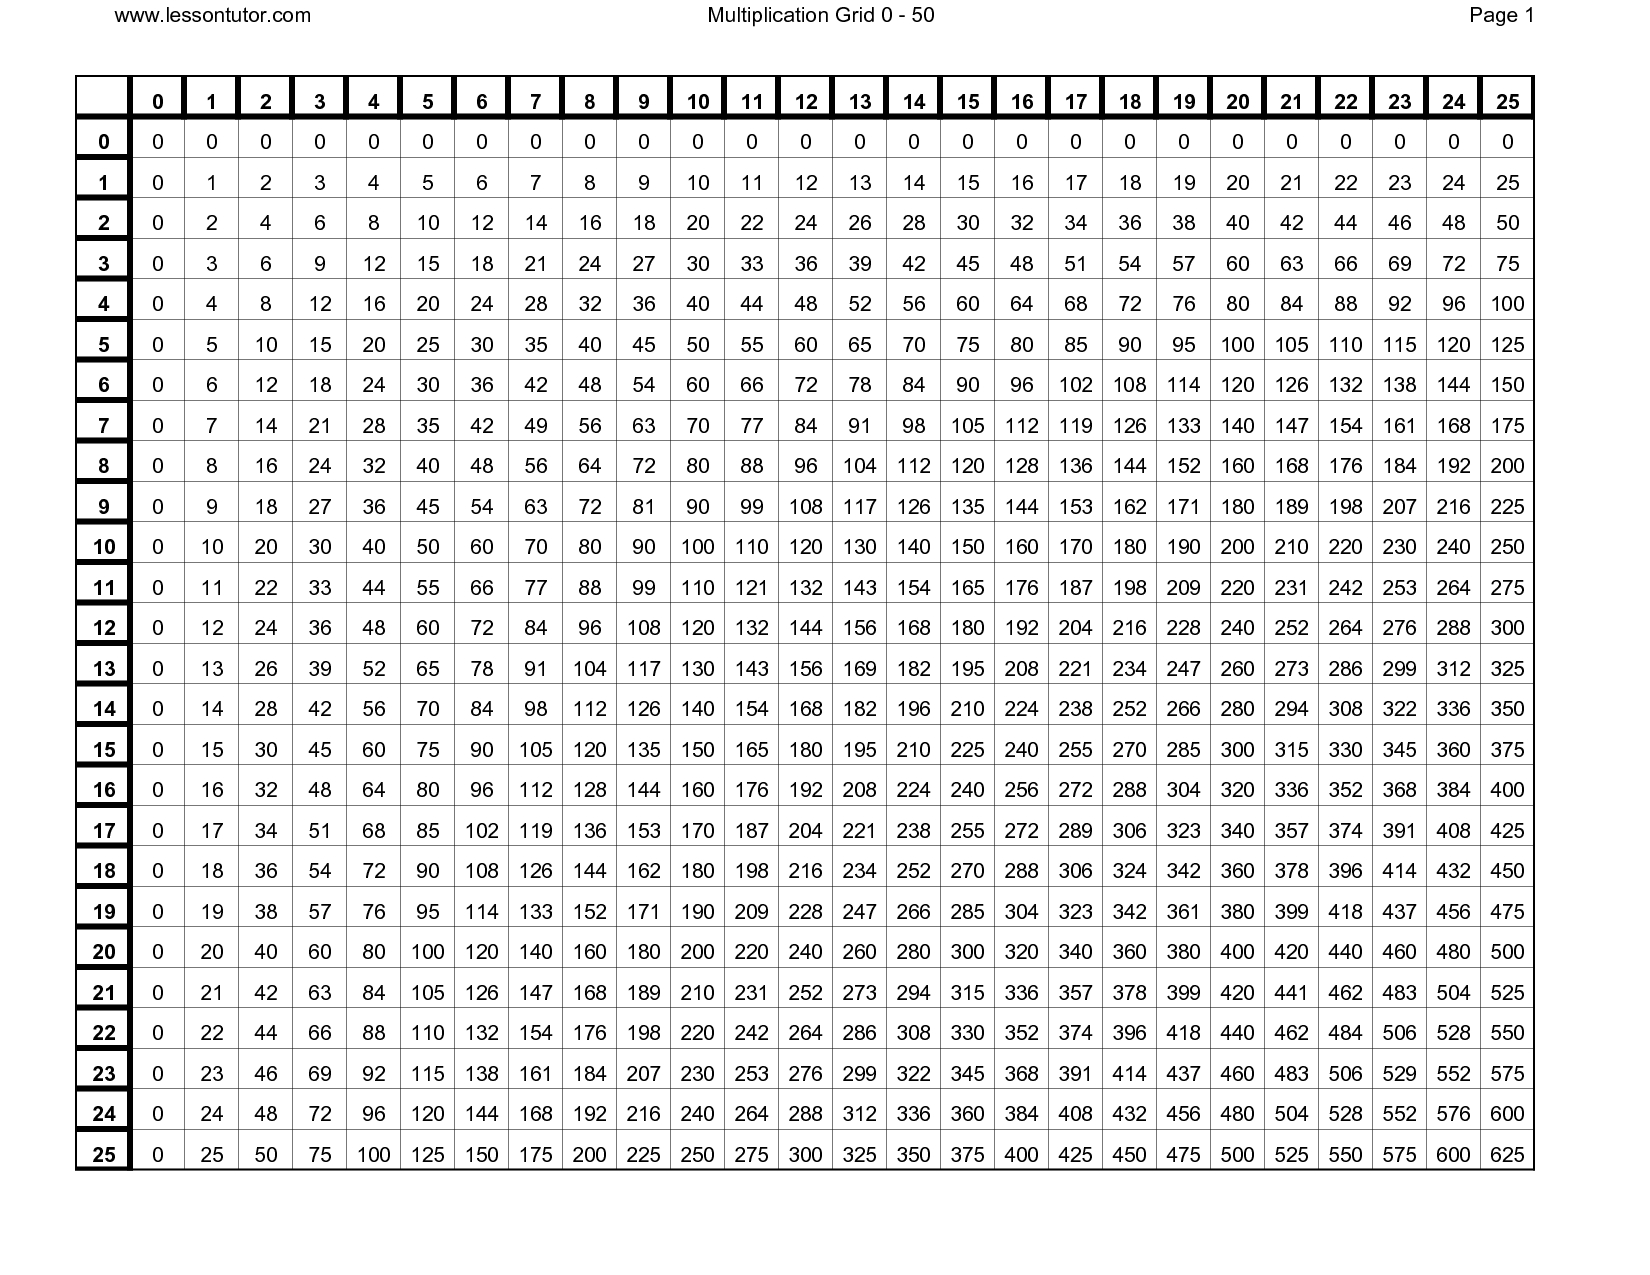 multiplication chart 15x15